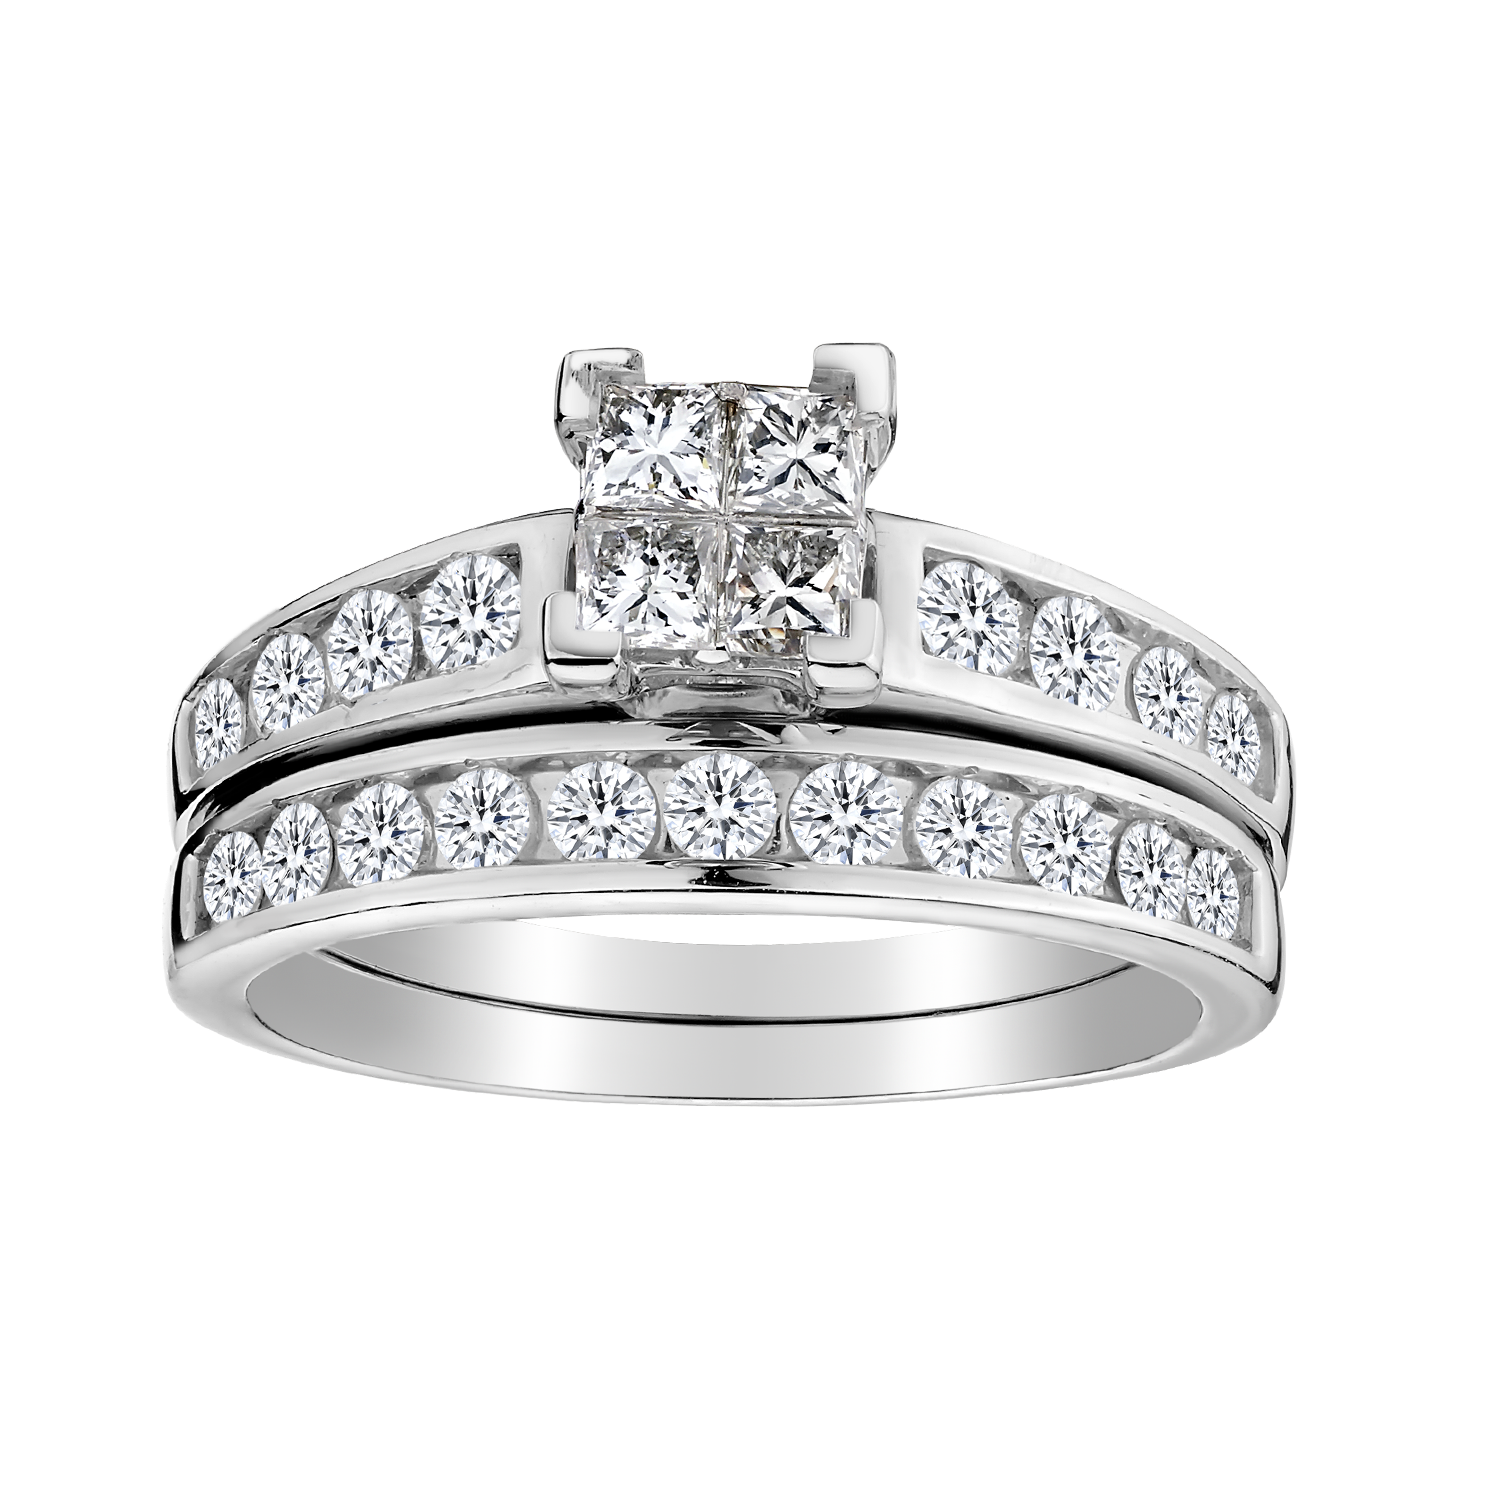 1.00 Carat Diamond Princess Engagement Ring Set, 10kt White Gold....................NOW